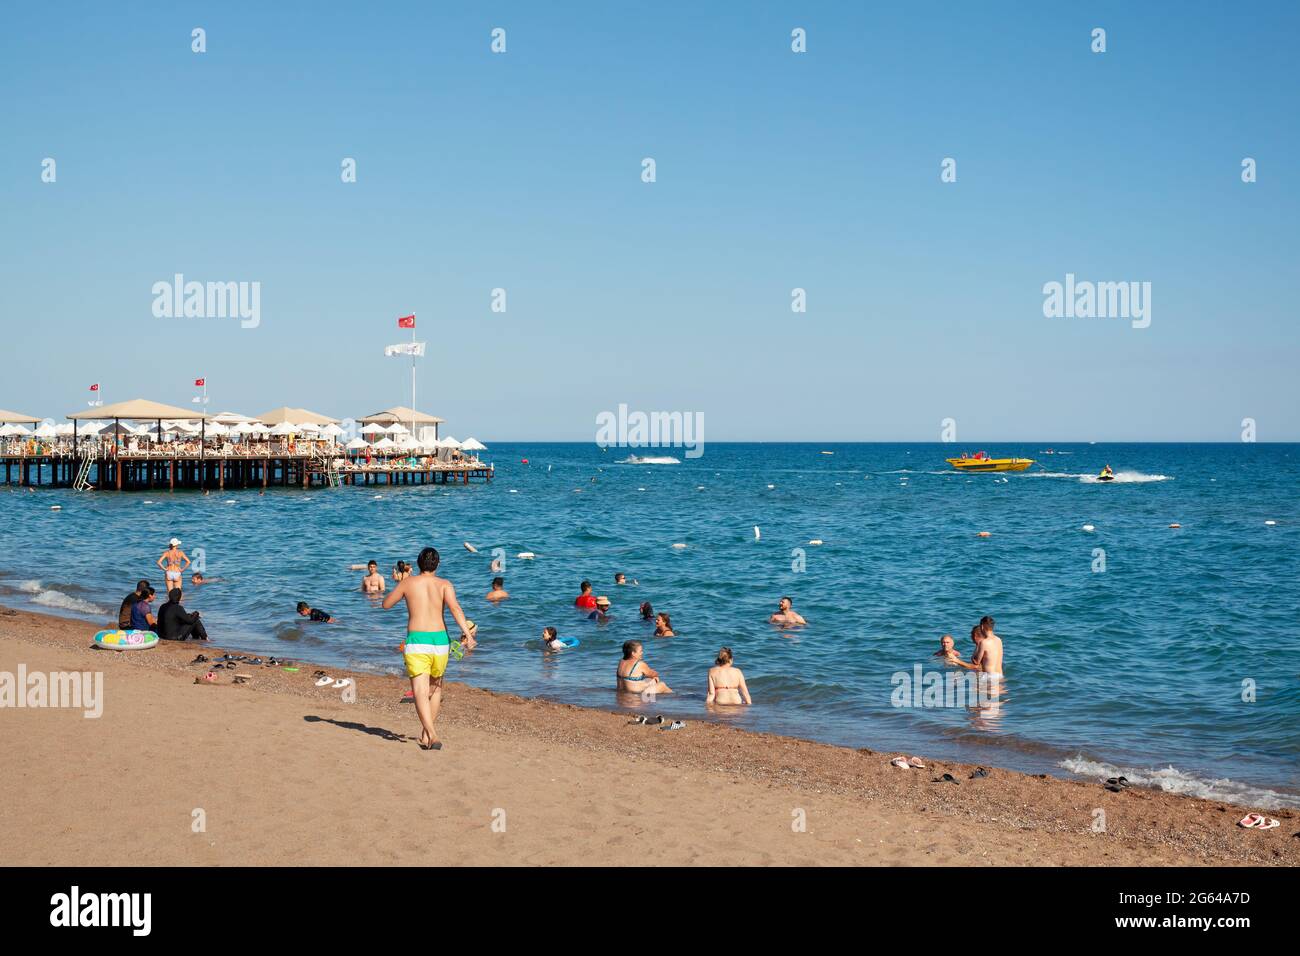 Antalya, Turkey-June 29, 2021: Beach-goers sunbathing, swimming or doing other activities on the beach in summer in Antalya. Stock Photo